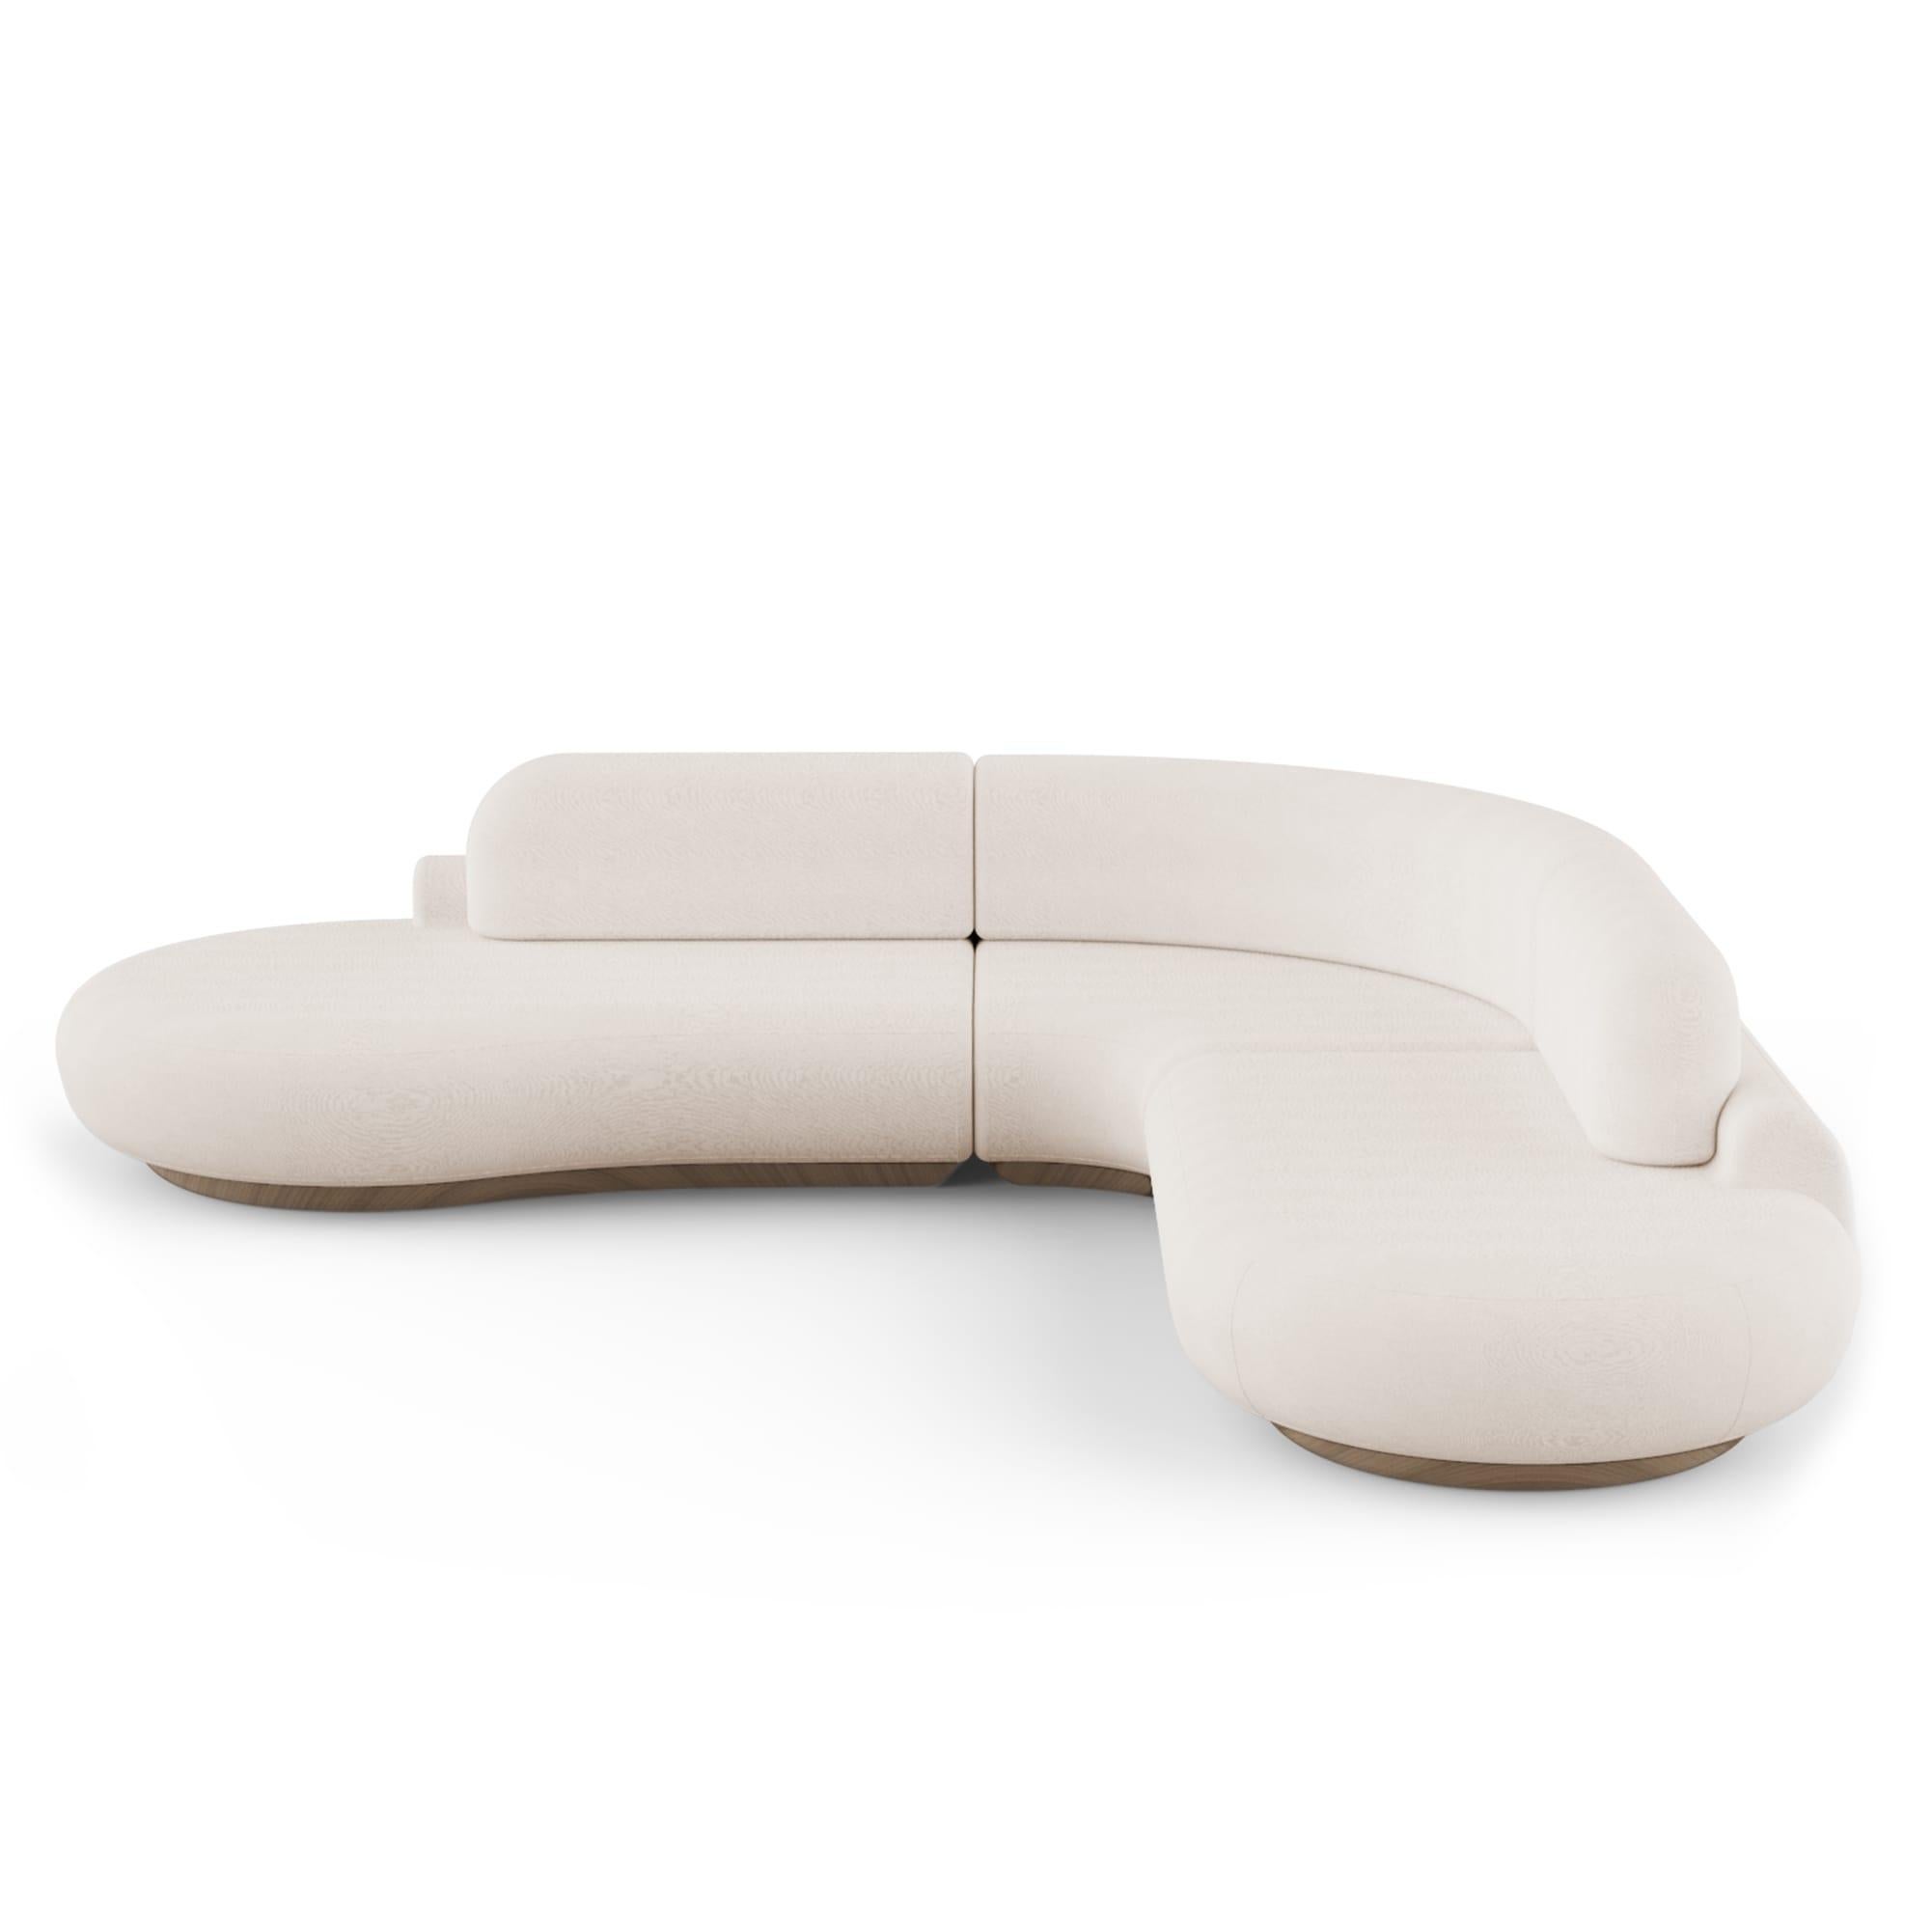 Upholstery Naked Sofa by Dooq